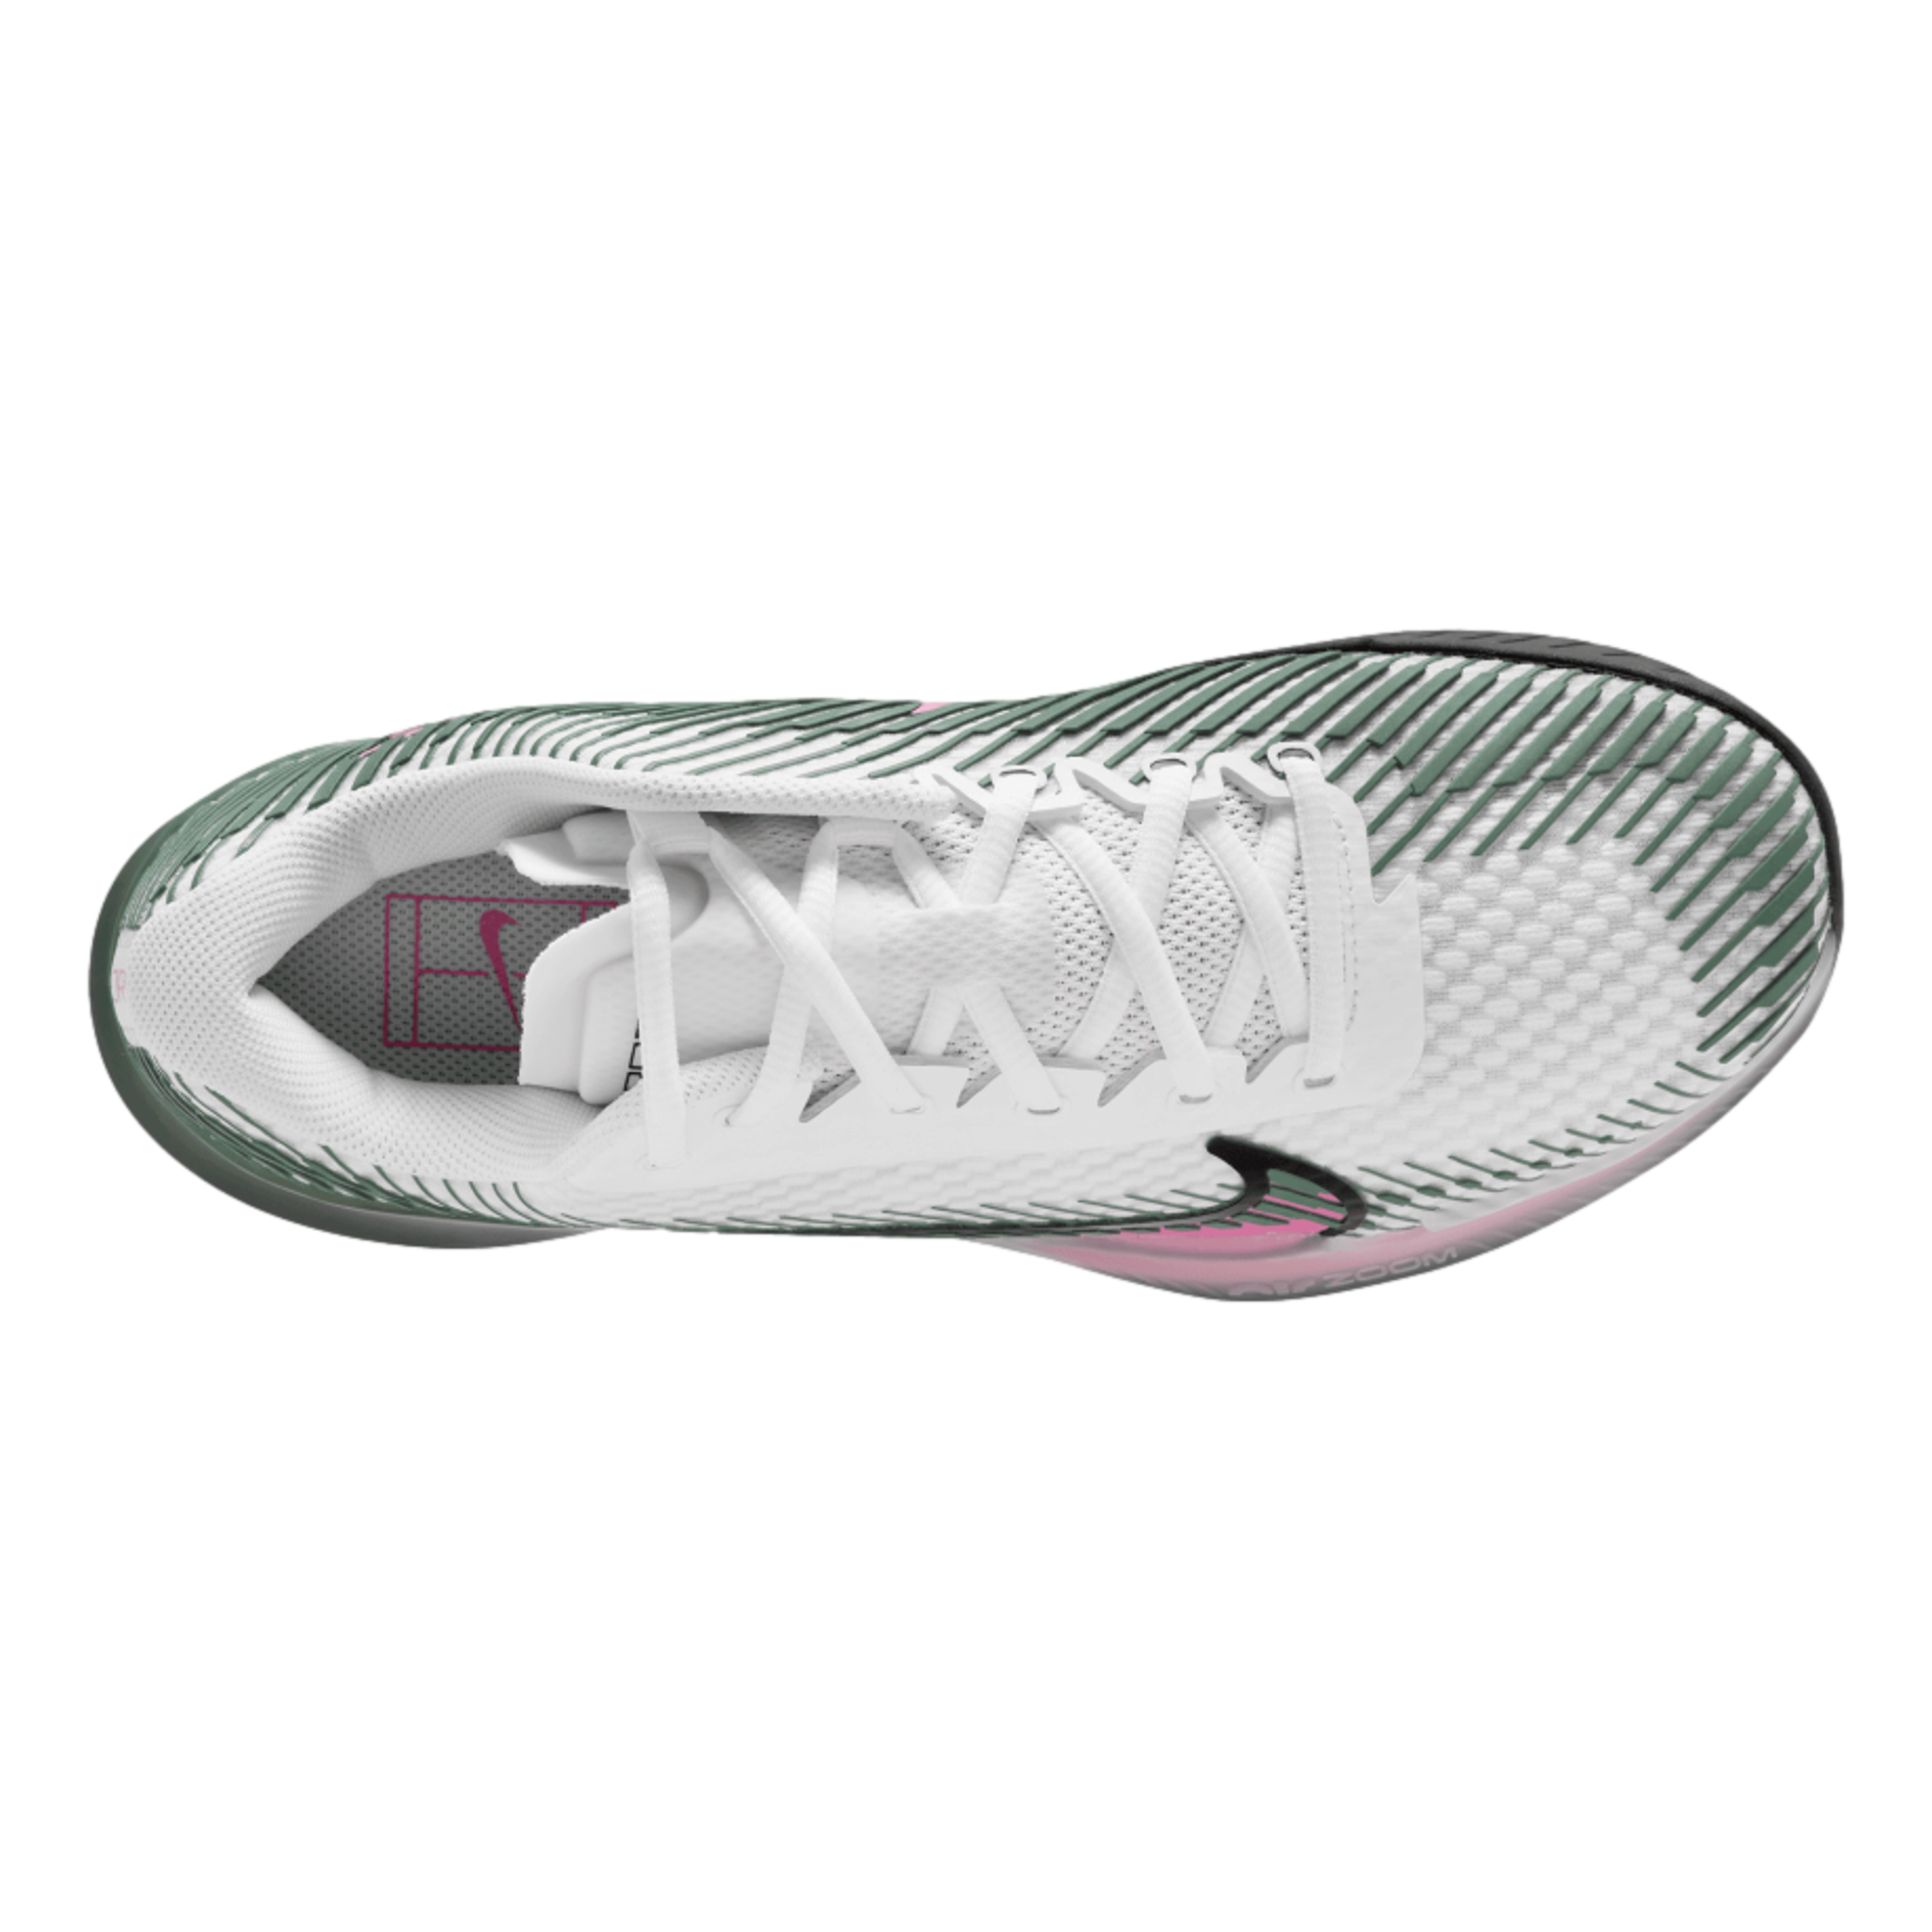 Air Zoom Vapor 11 Women's Tennis Shoe